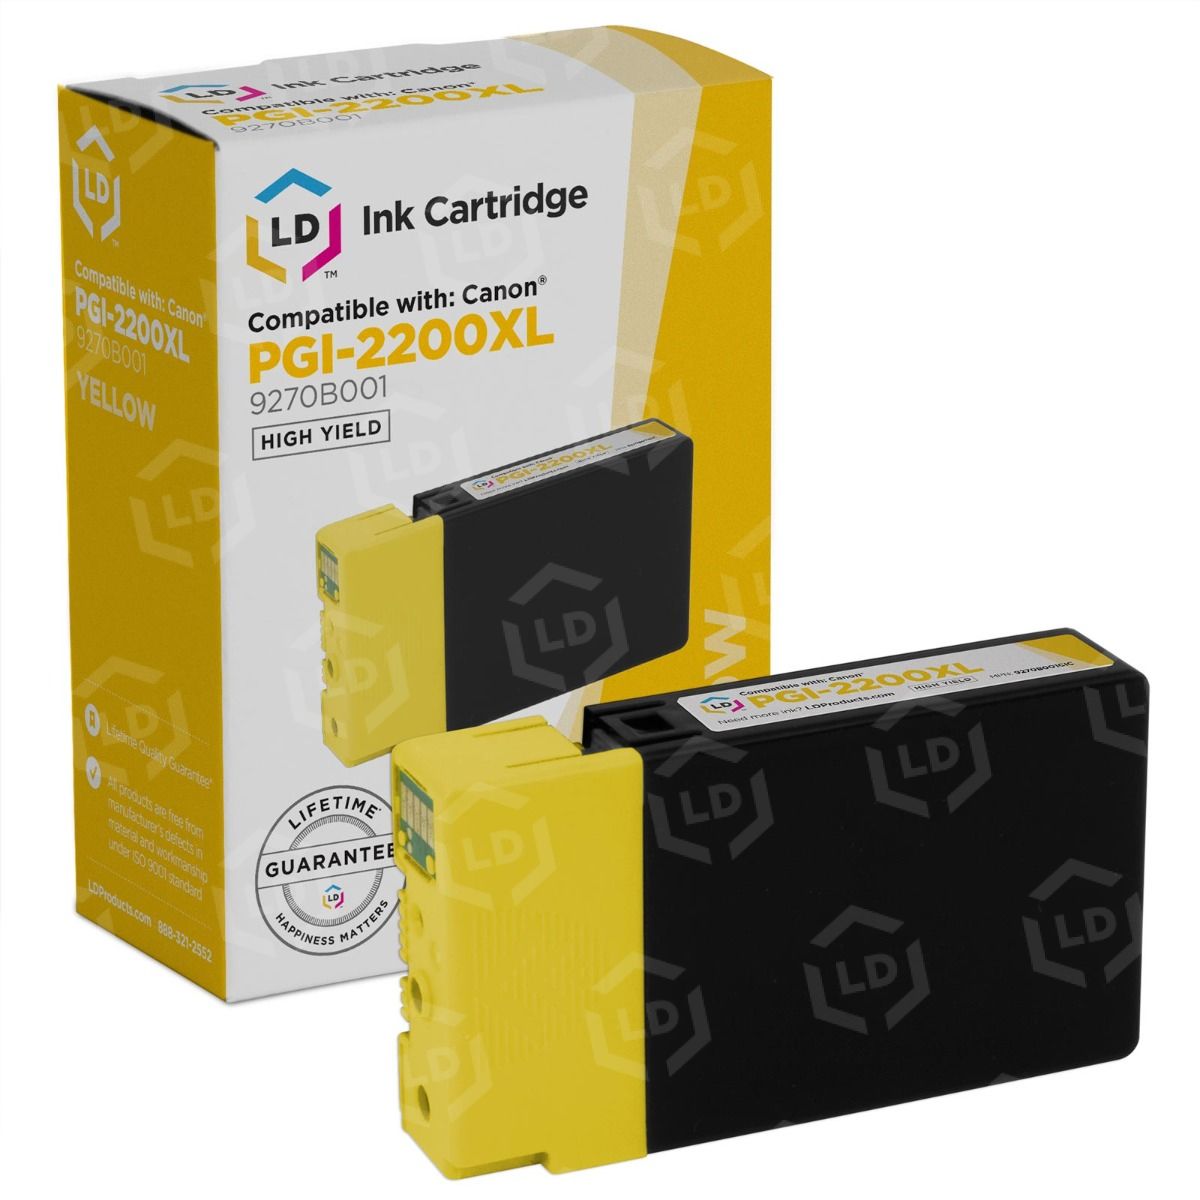 HP 953XL Original High Yield Cartridges Combo Set – OEM Distributors